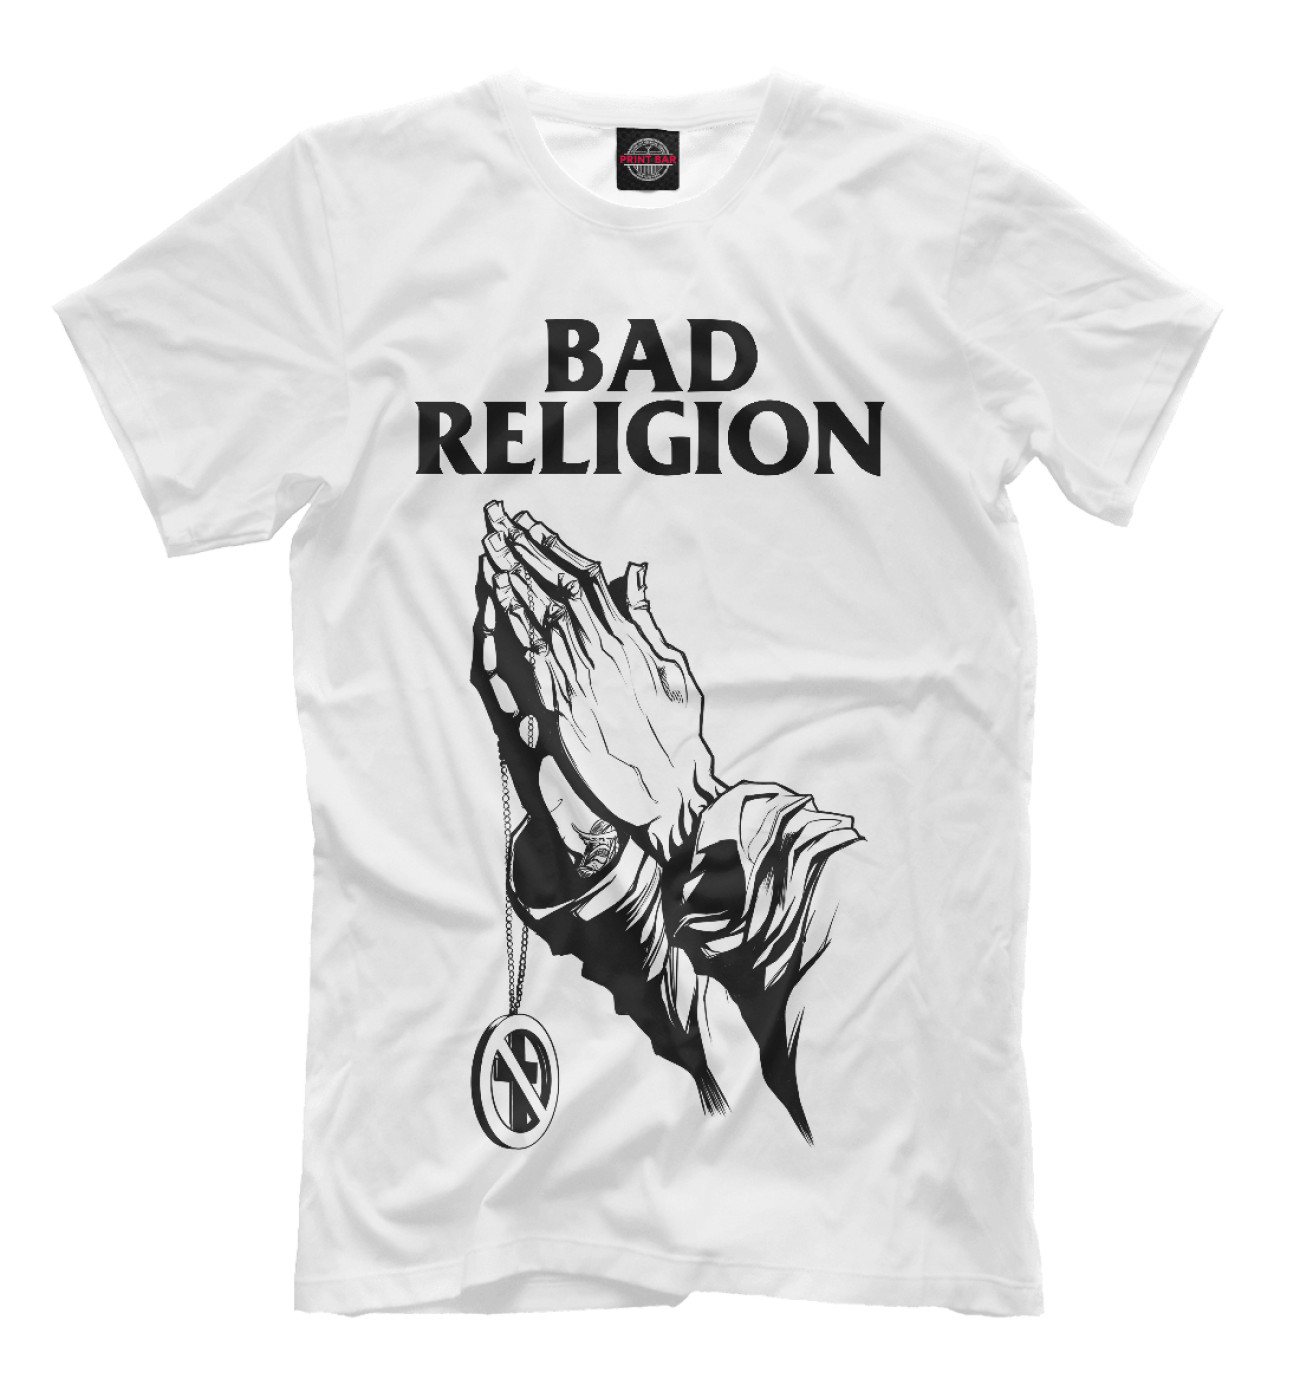 Мужская Футболка Bad Religion, артикул: BRL-873487-fut-2